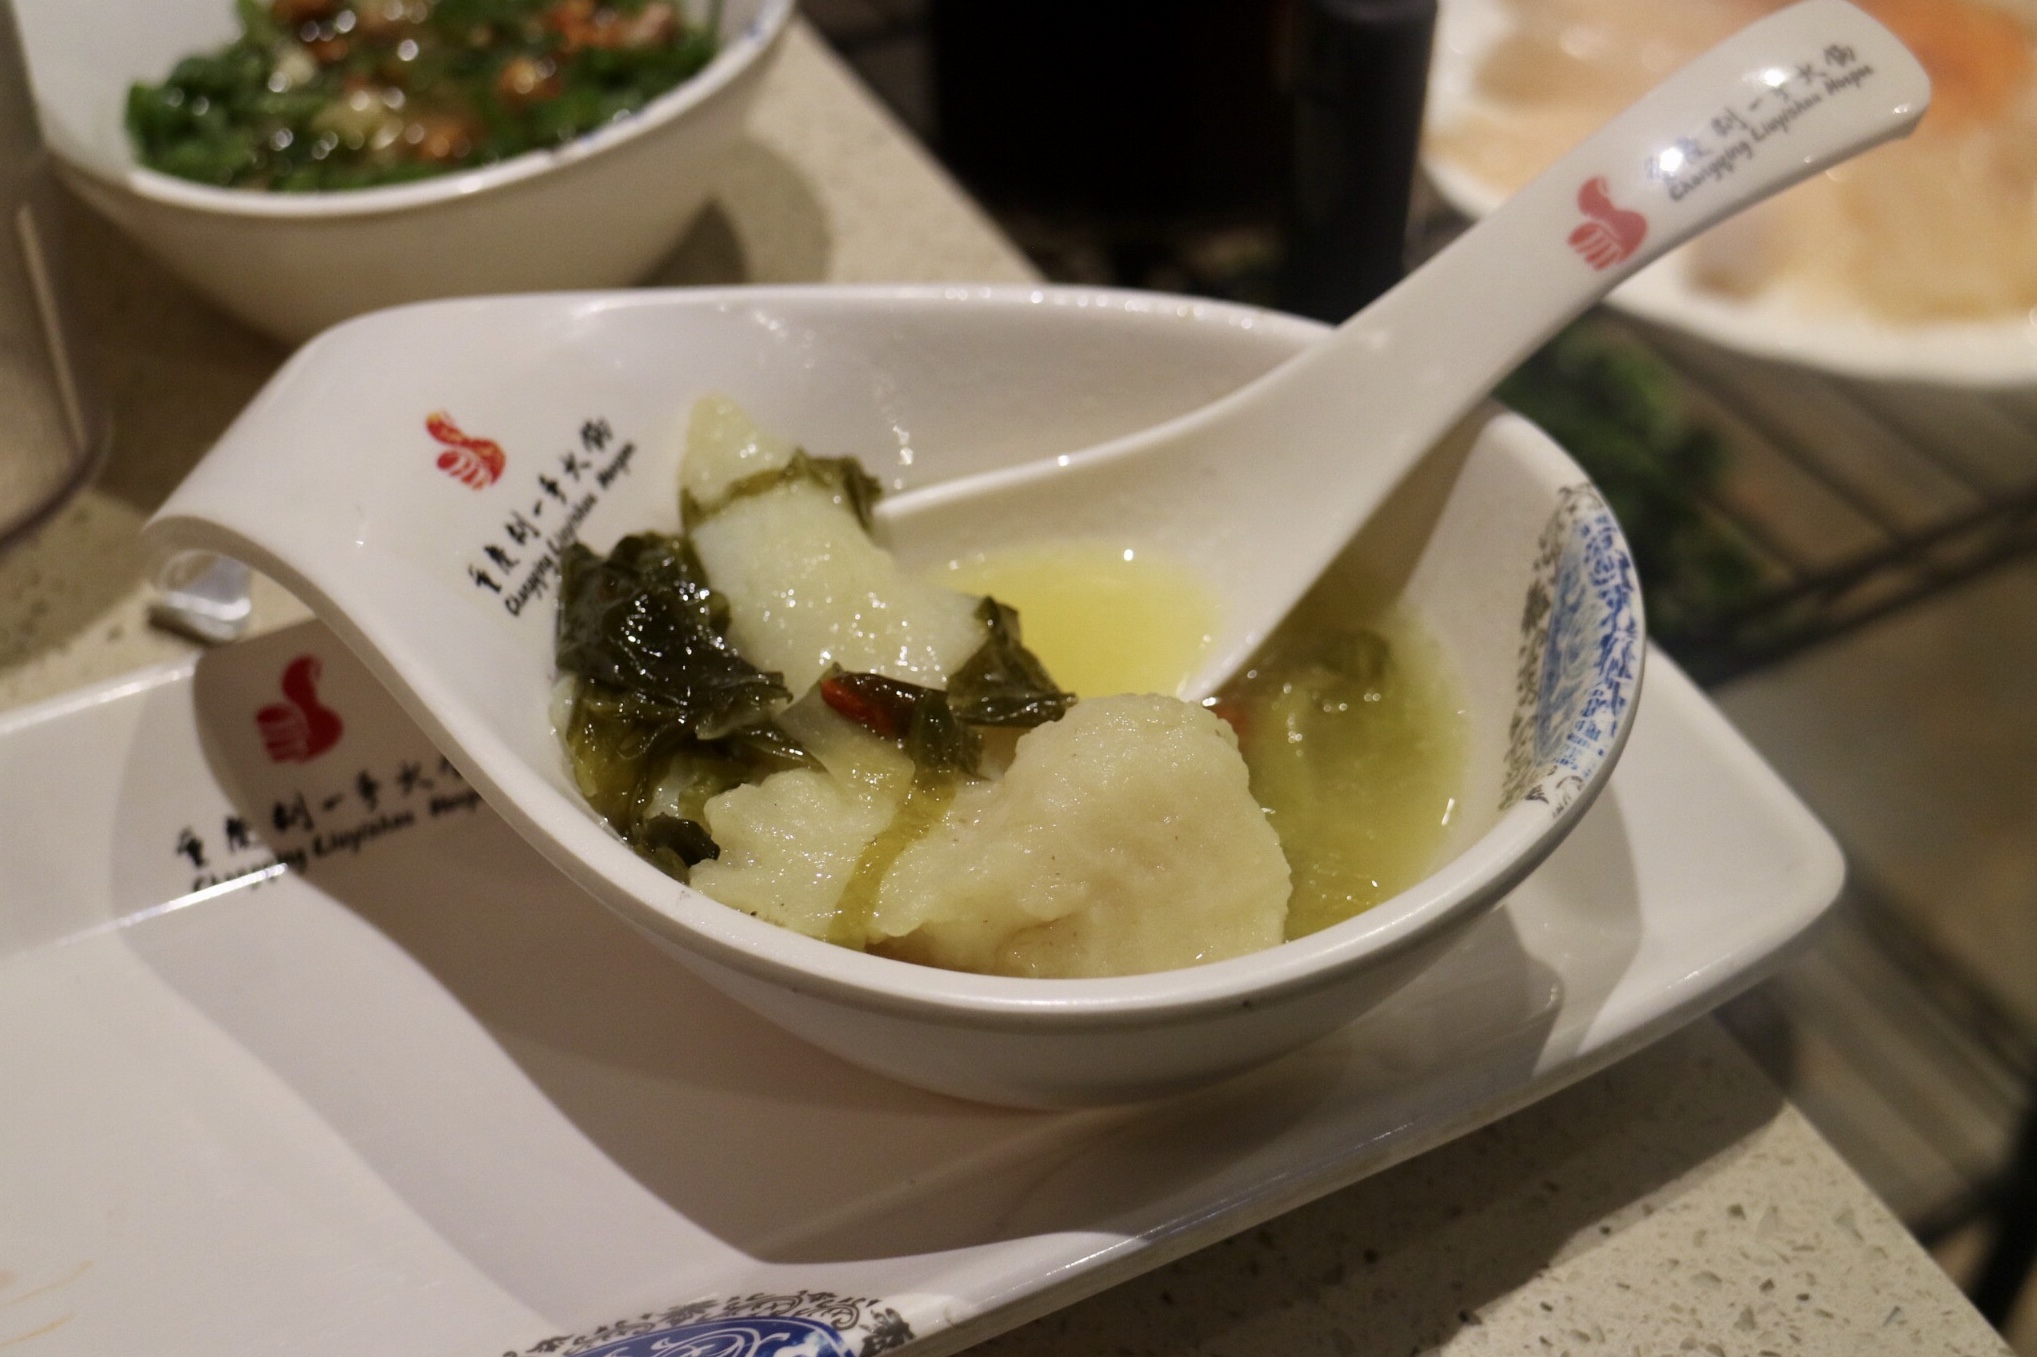 sauerkraut fish hot pot at Liuyishou Robosn